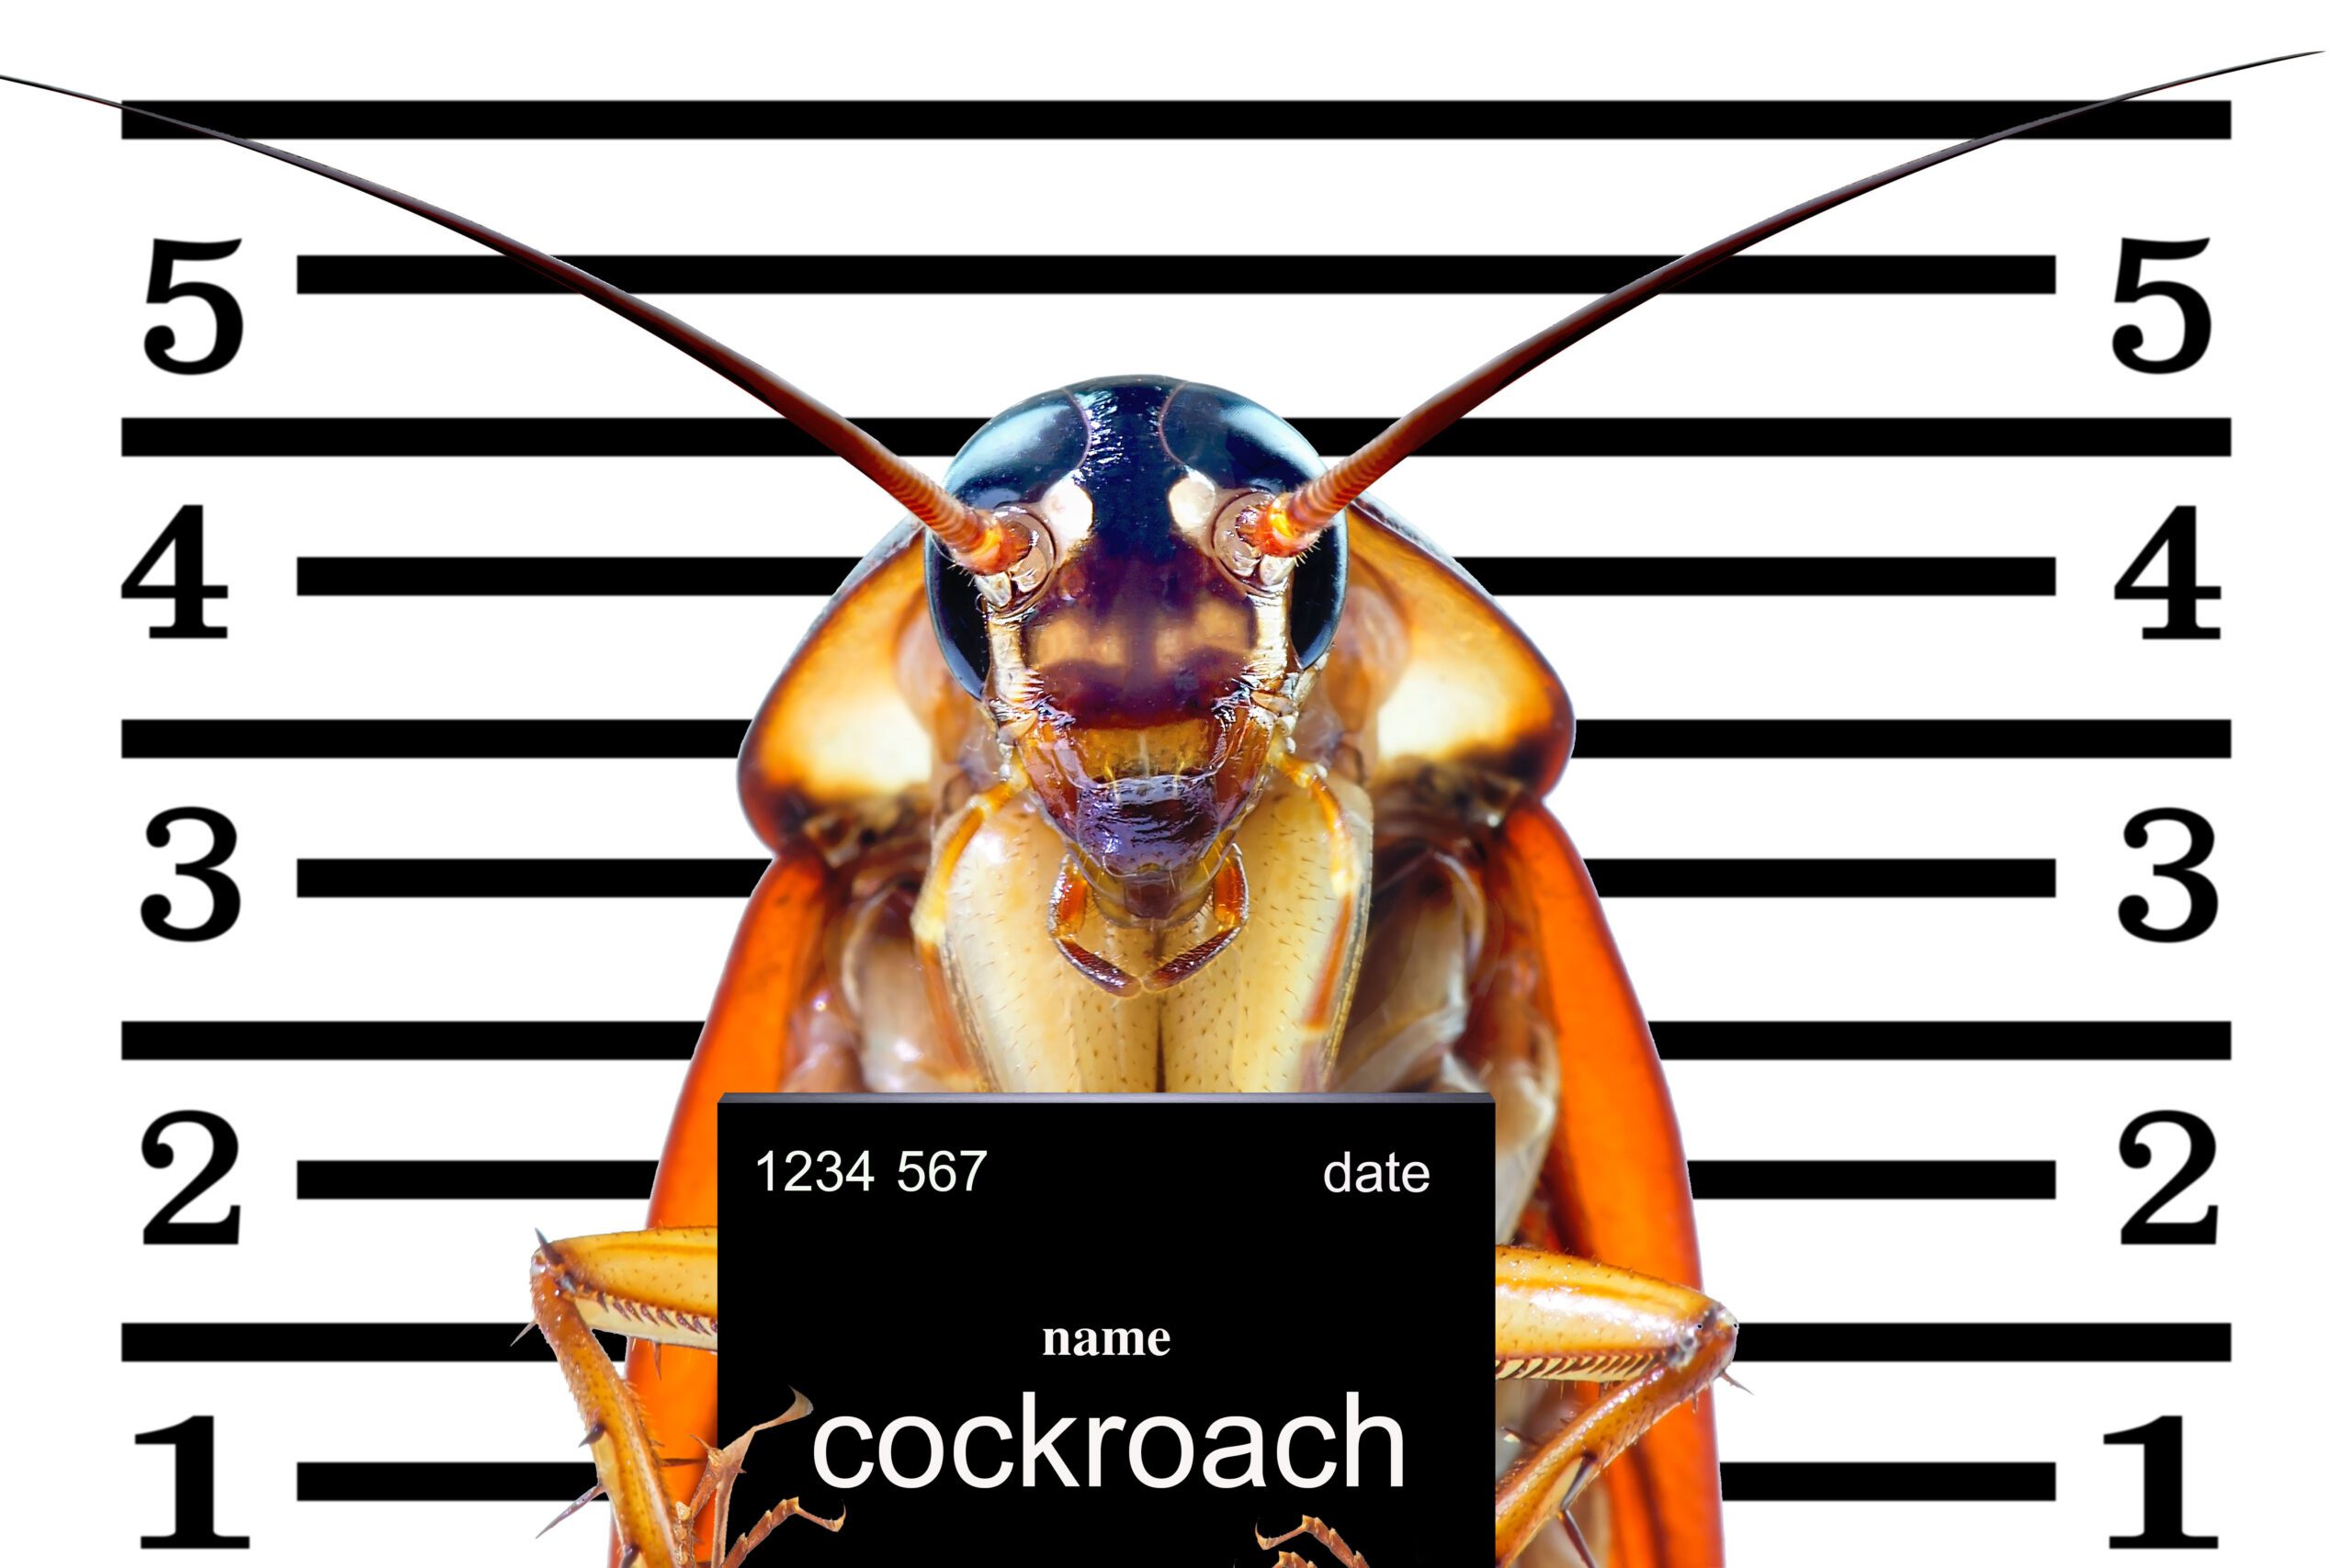 Cockroach mugshot